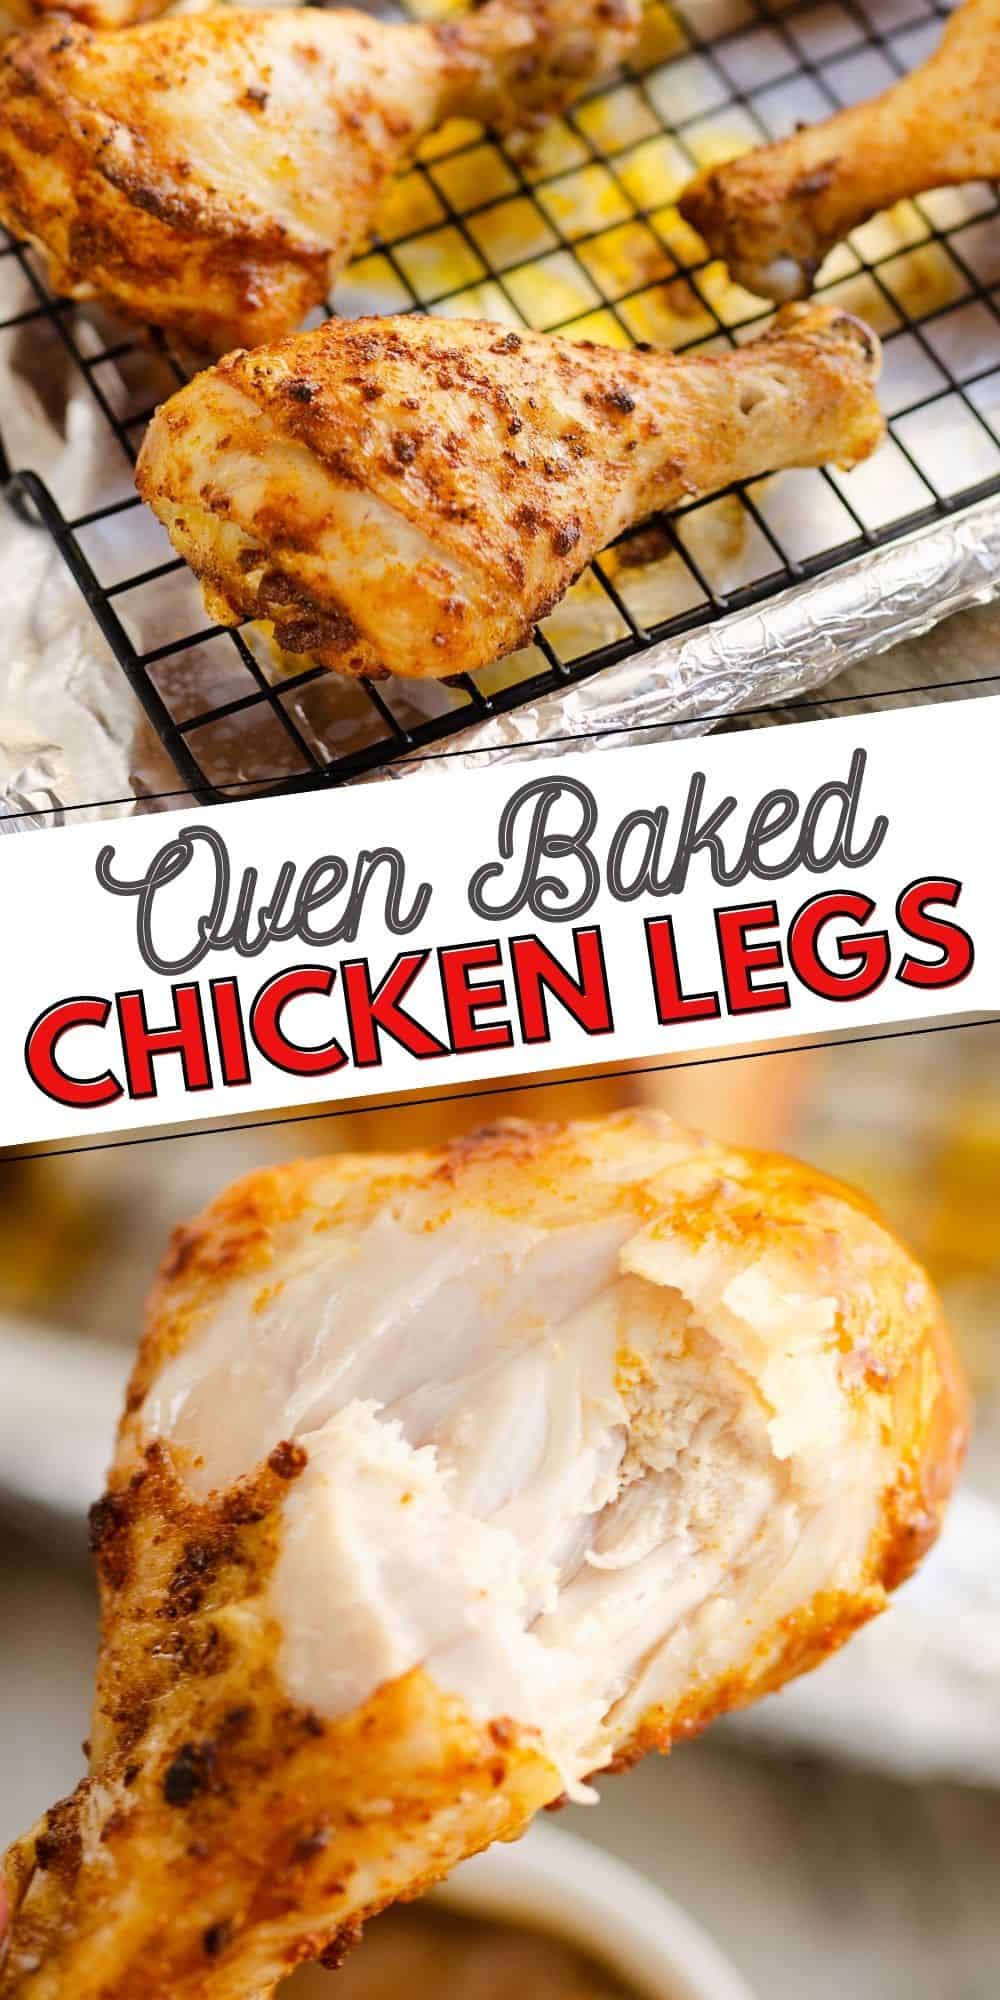 Baked Chicken Legs